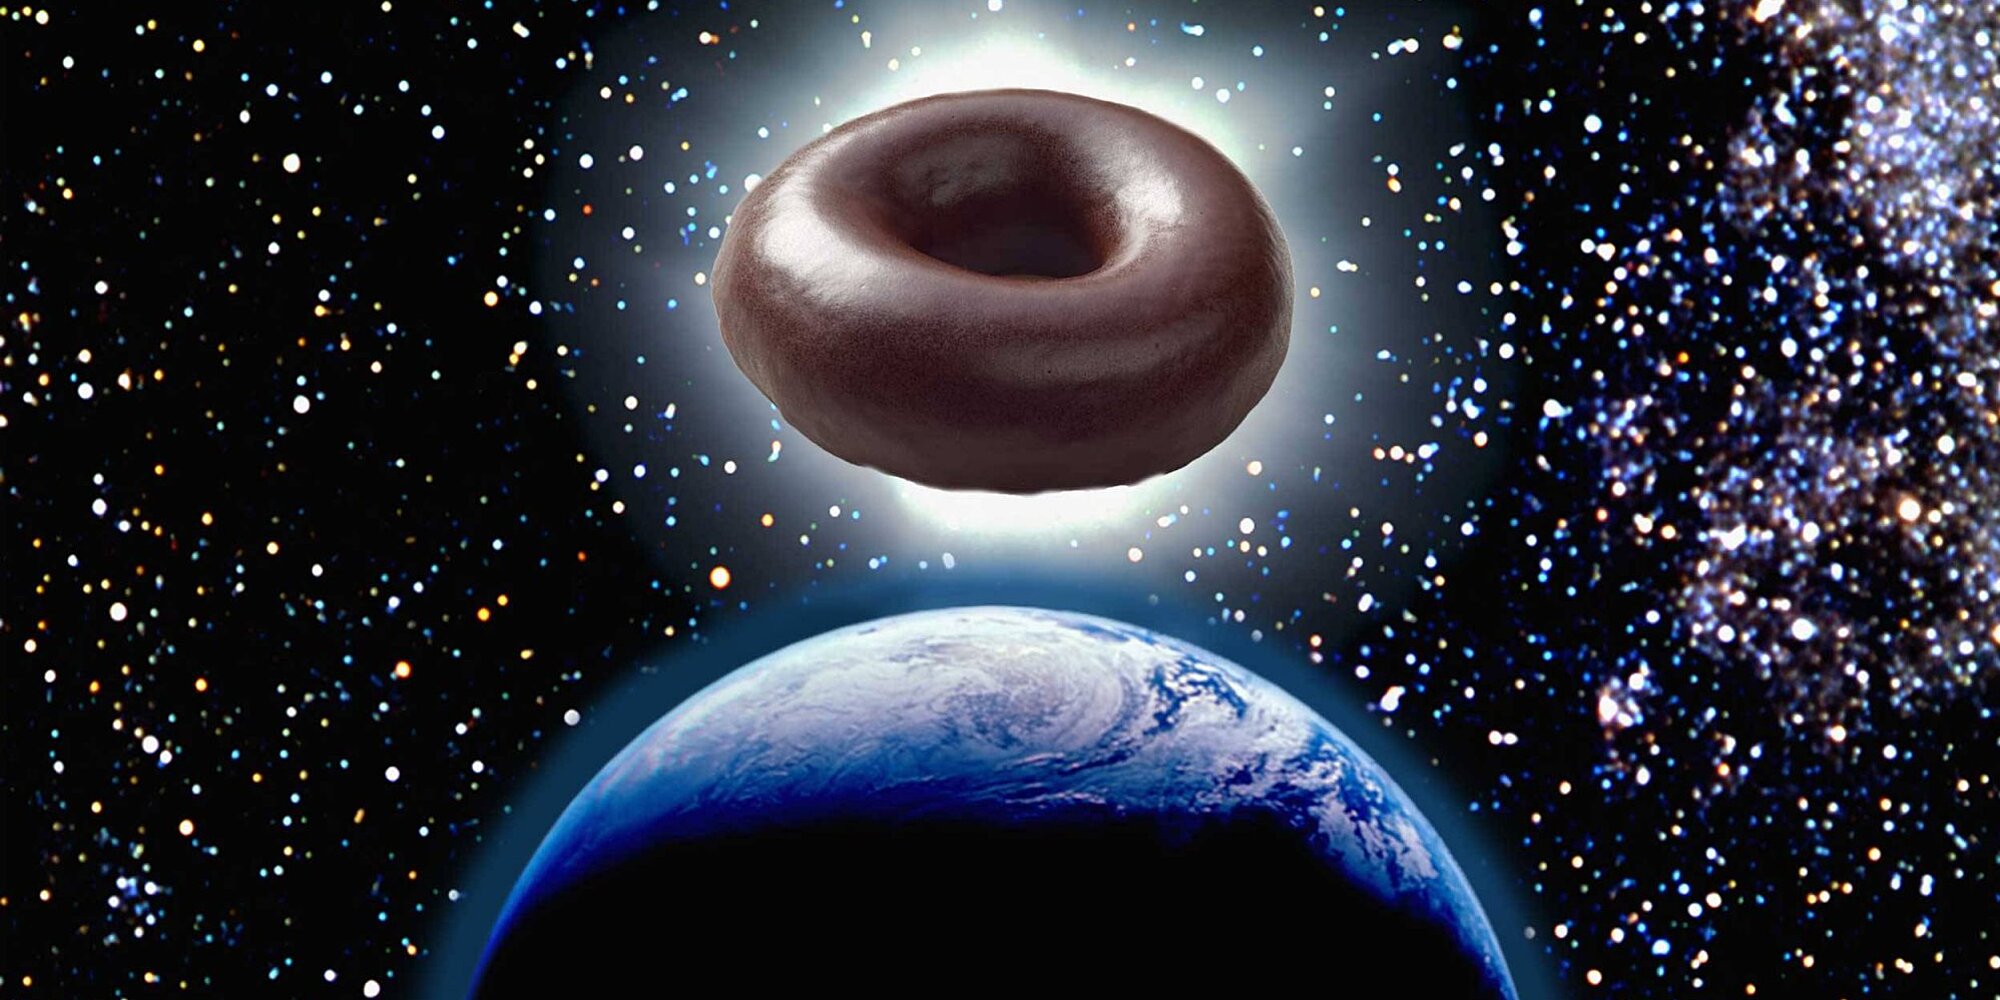 Krispy Kreme's Solar Eclipse Doughnuts Are Covered in Chocolate MyRecipes